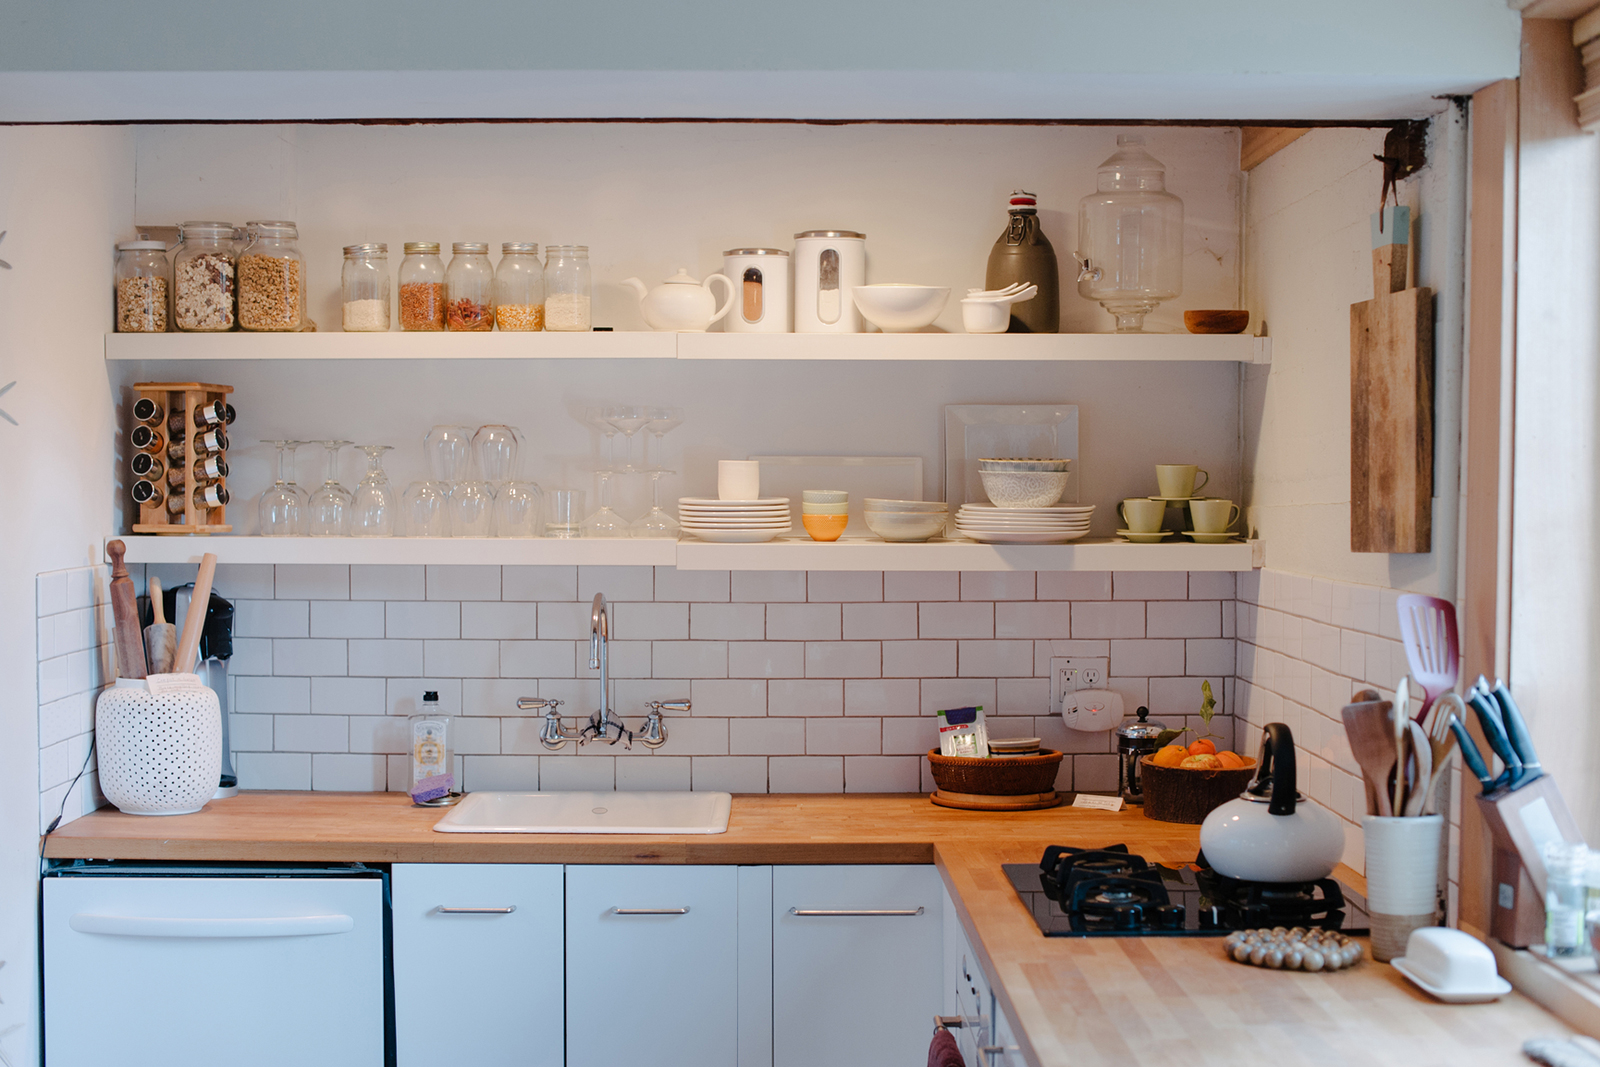 How To Design A Kitchen Kitchen Layout Ideas HouseLogic